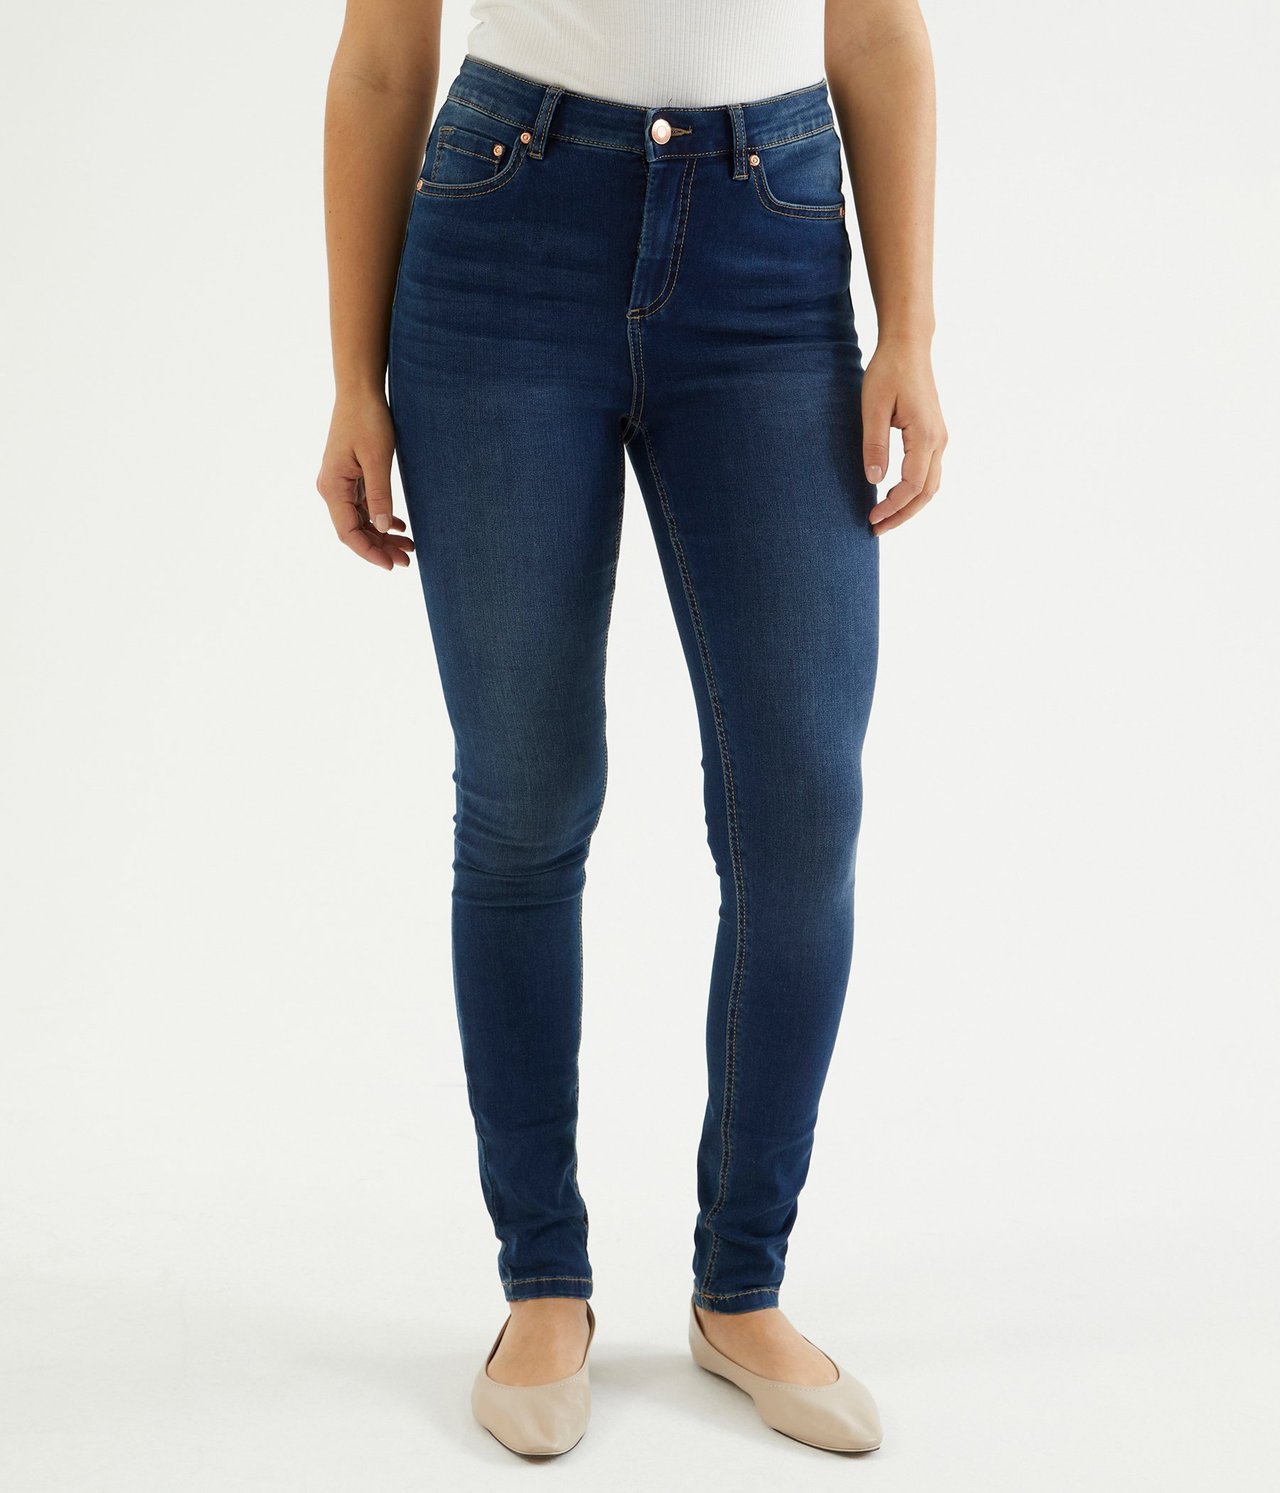 Super Slim Jeans High Waist - Tumma denimi - 174cm / Storlek: 38 - 6